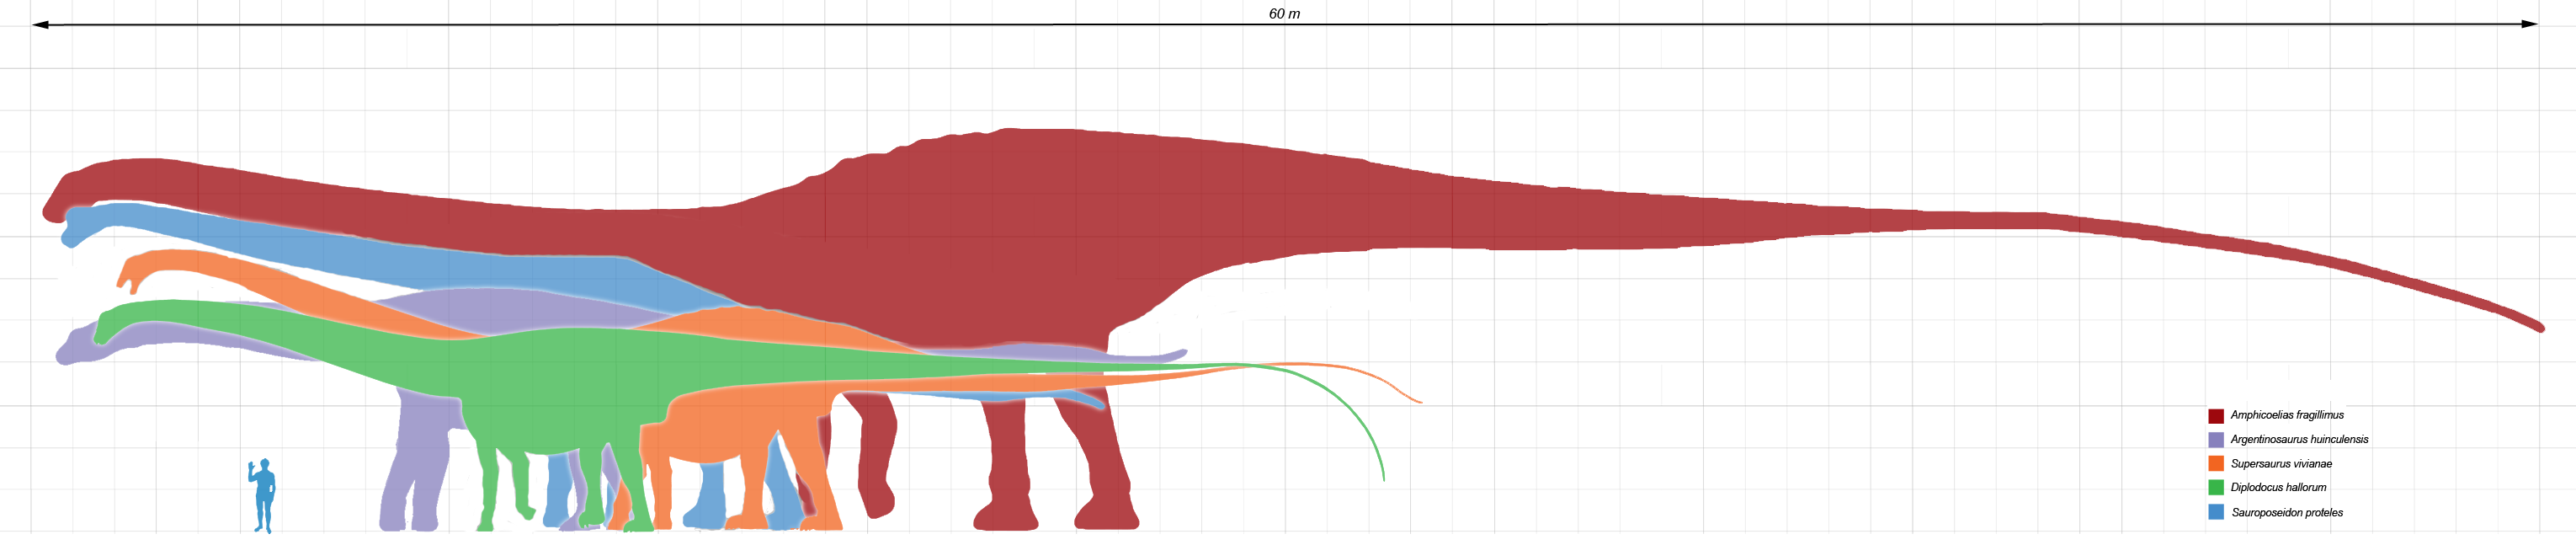 Sauropod_Size_Chart.png